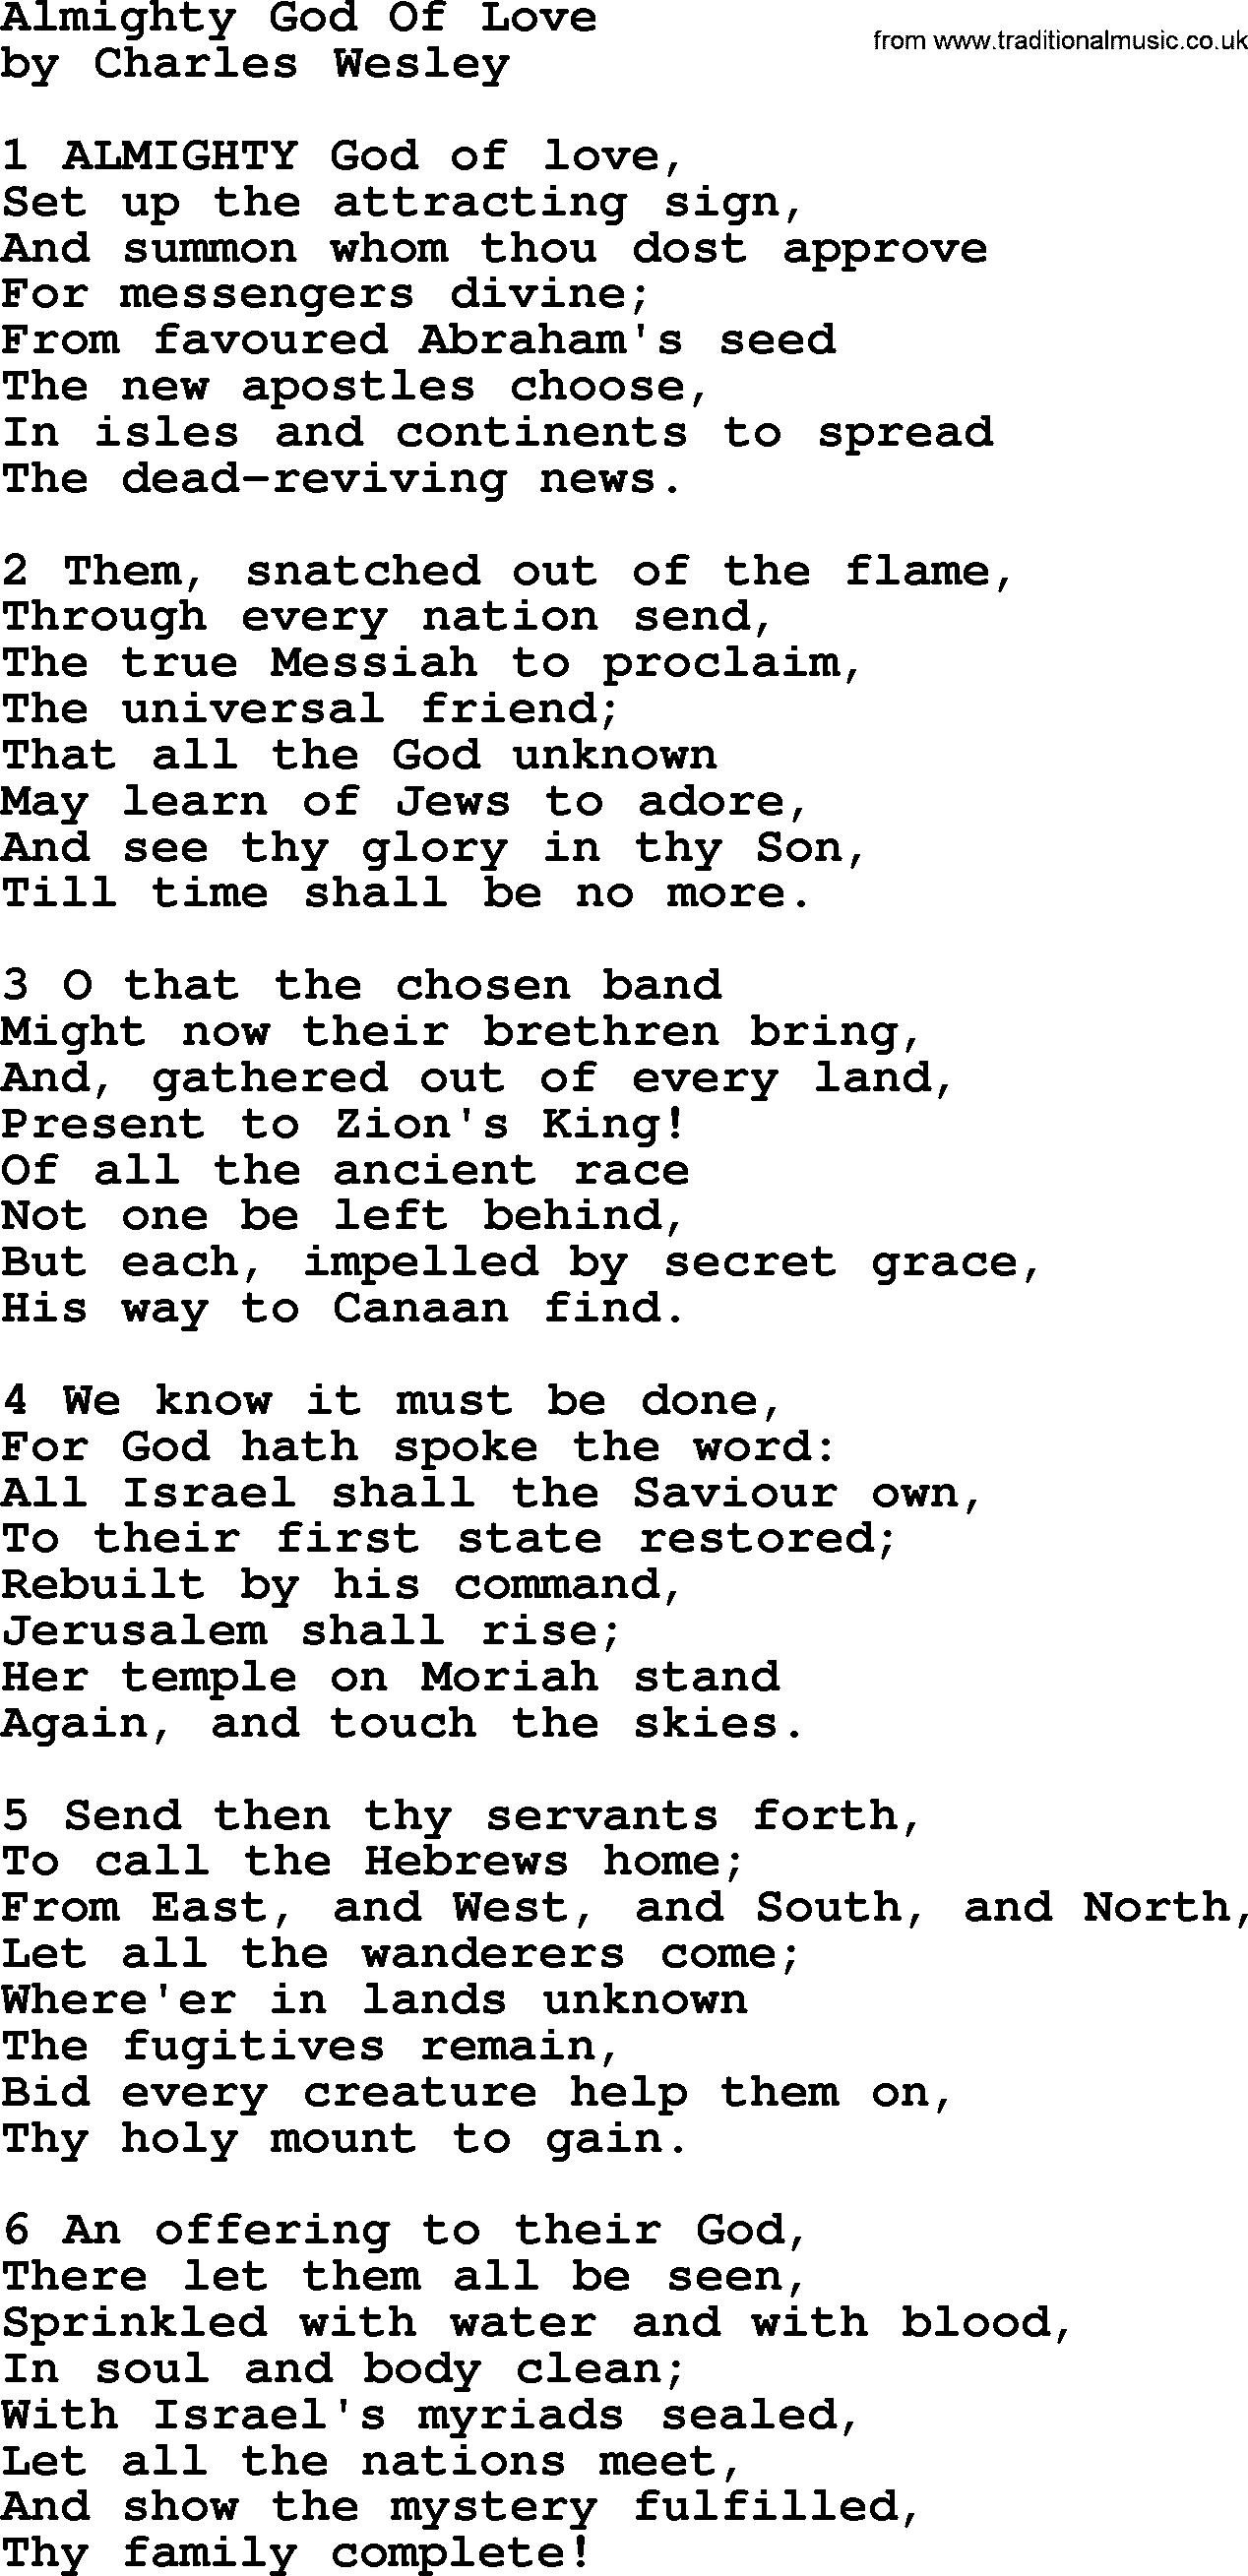 Charles Wesley hymn: Almighty God Of Love, lyrics